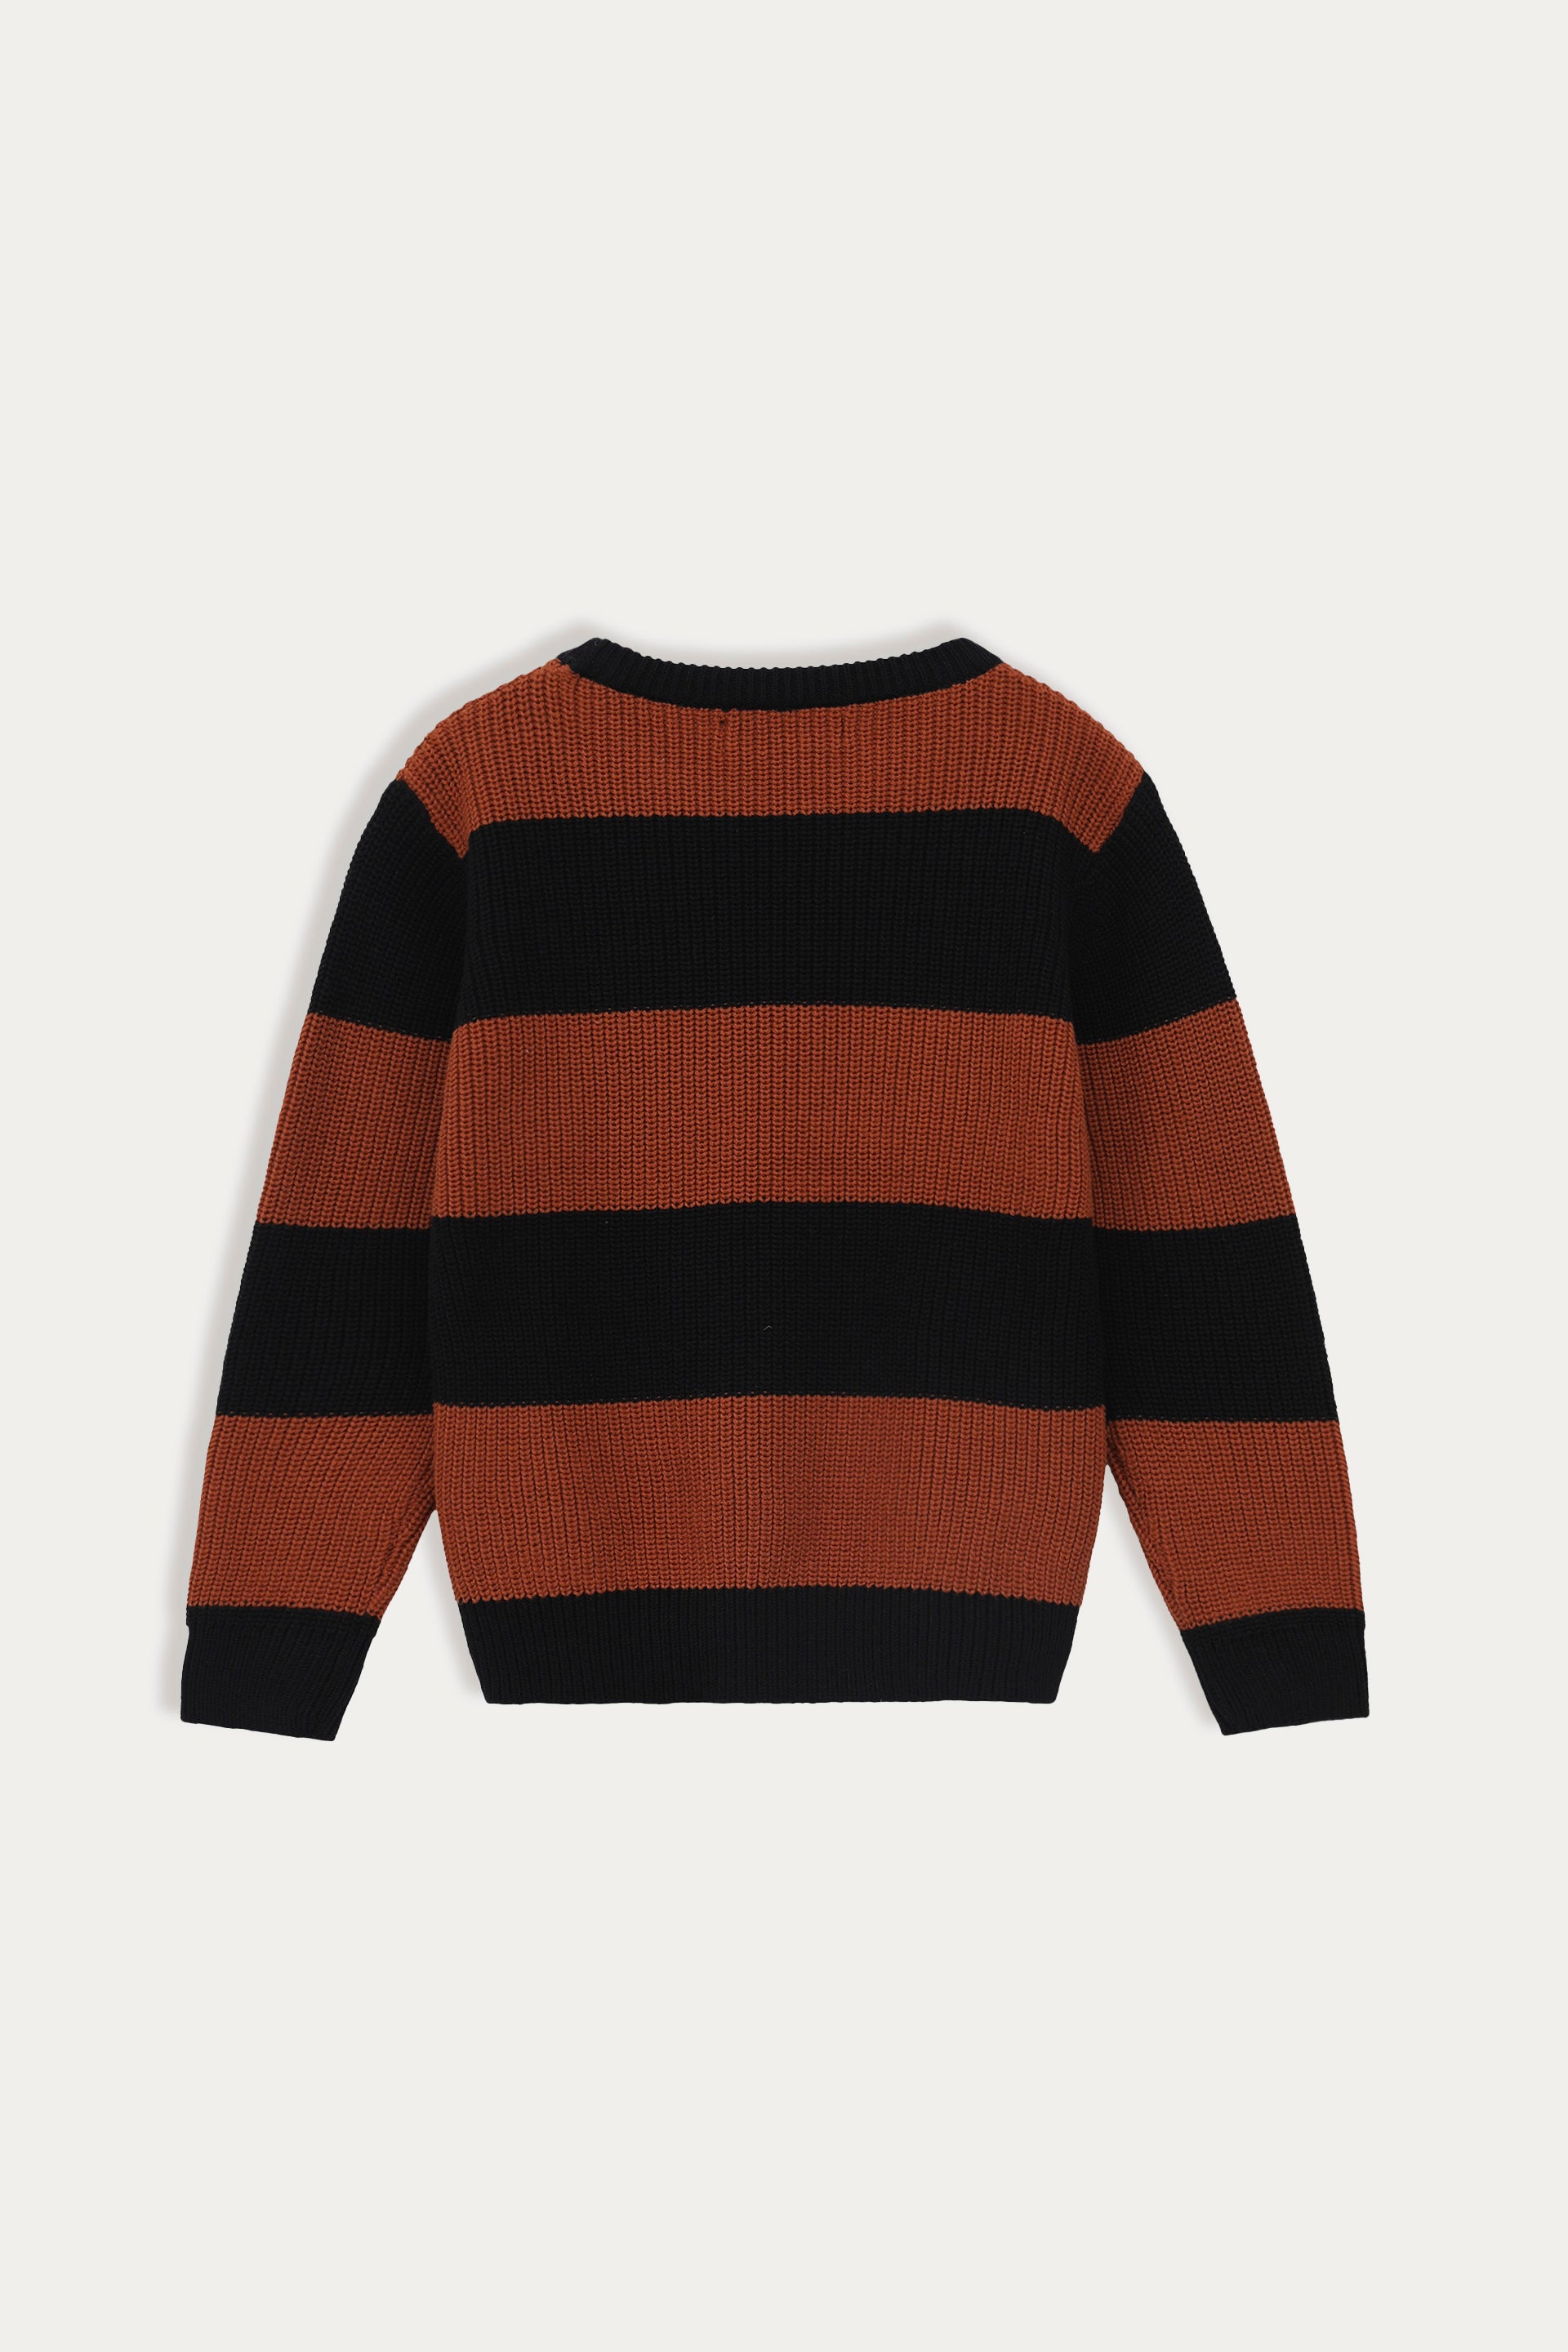 Broad Striped Sweater